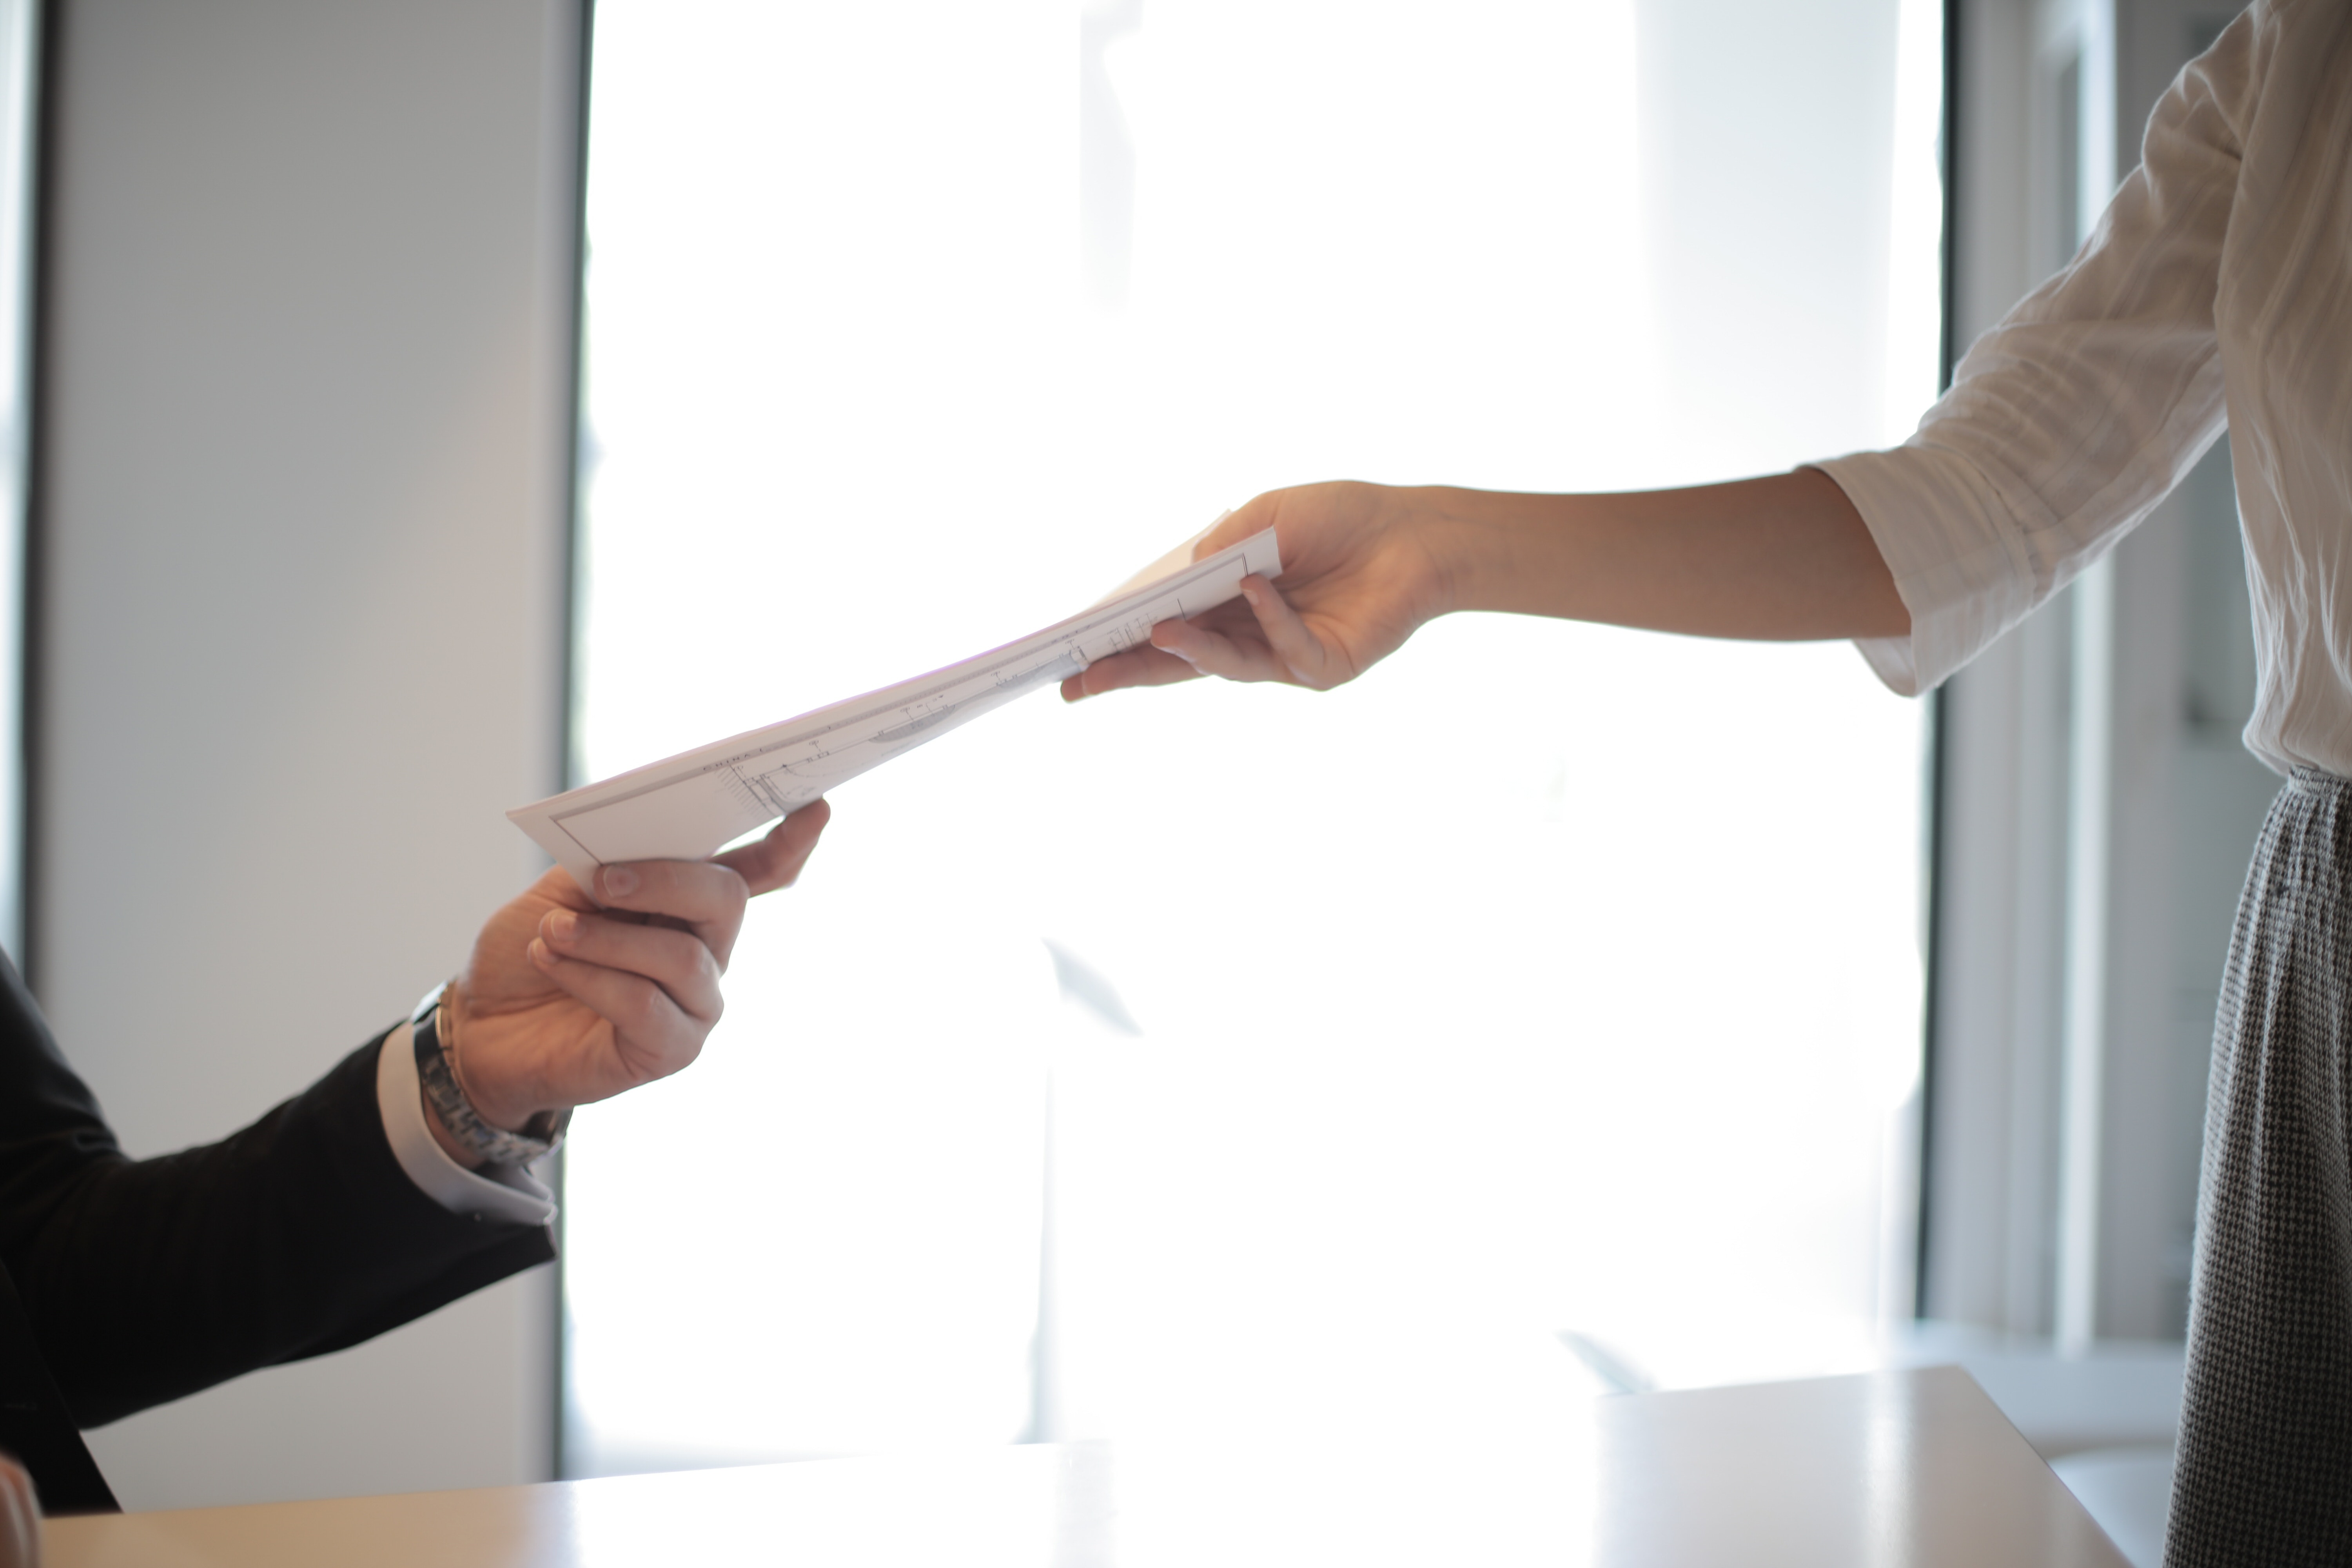 A job applicant hands her CV to a hiring manager during a MedTech job interview.